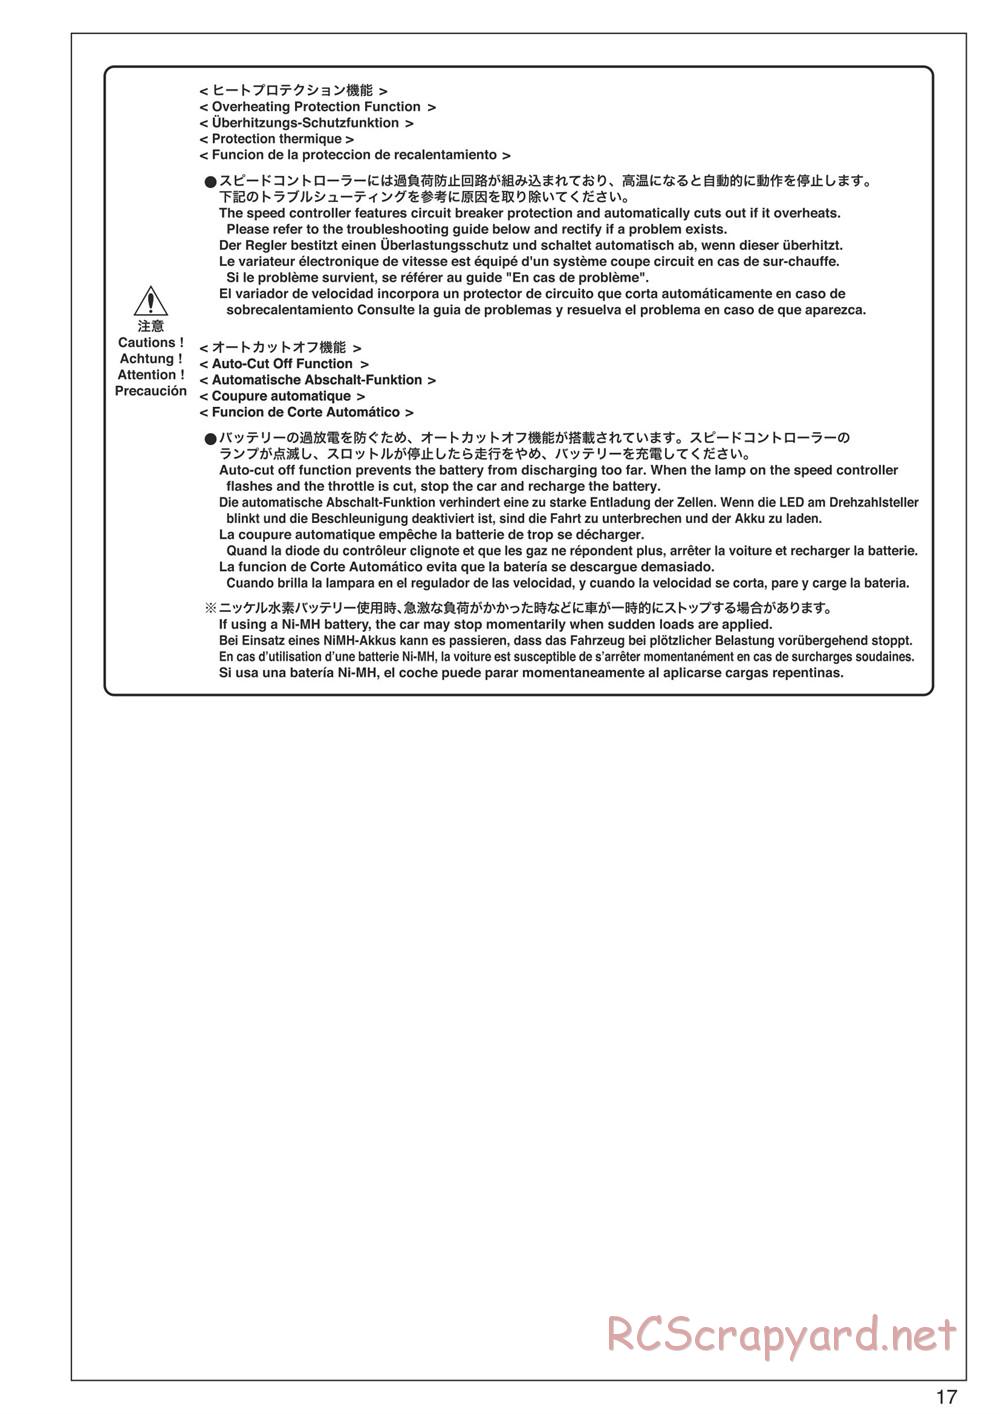 Kyosho - DMT VE-R - Manual - Page 17